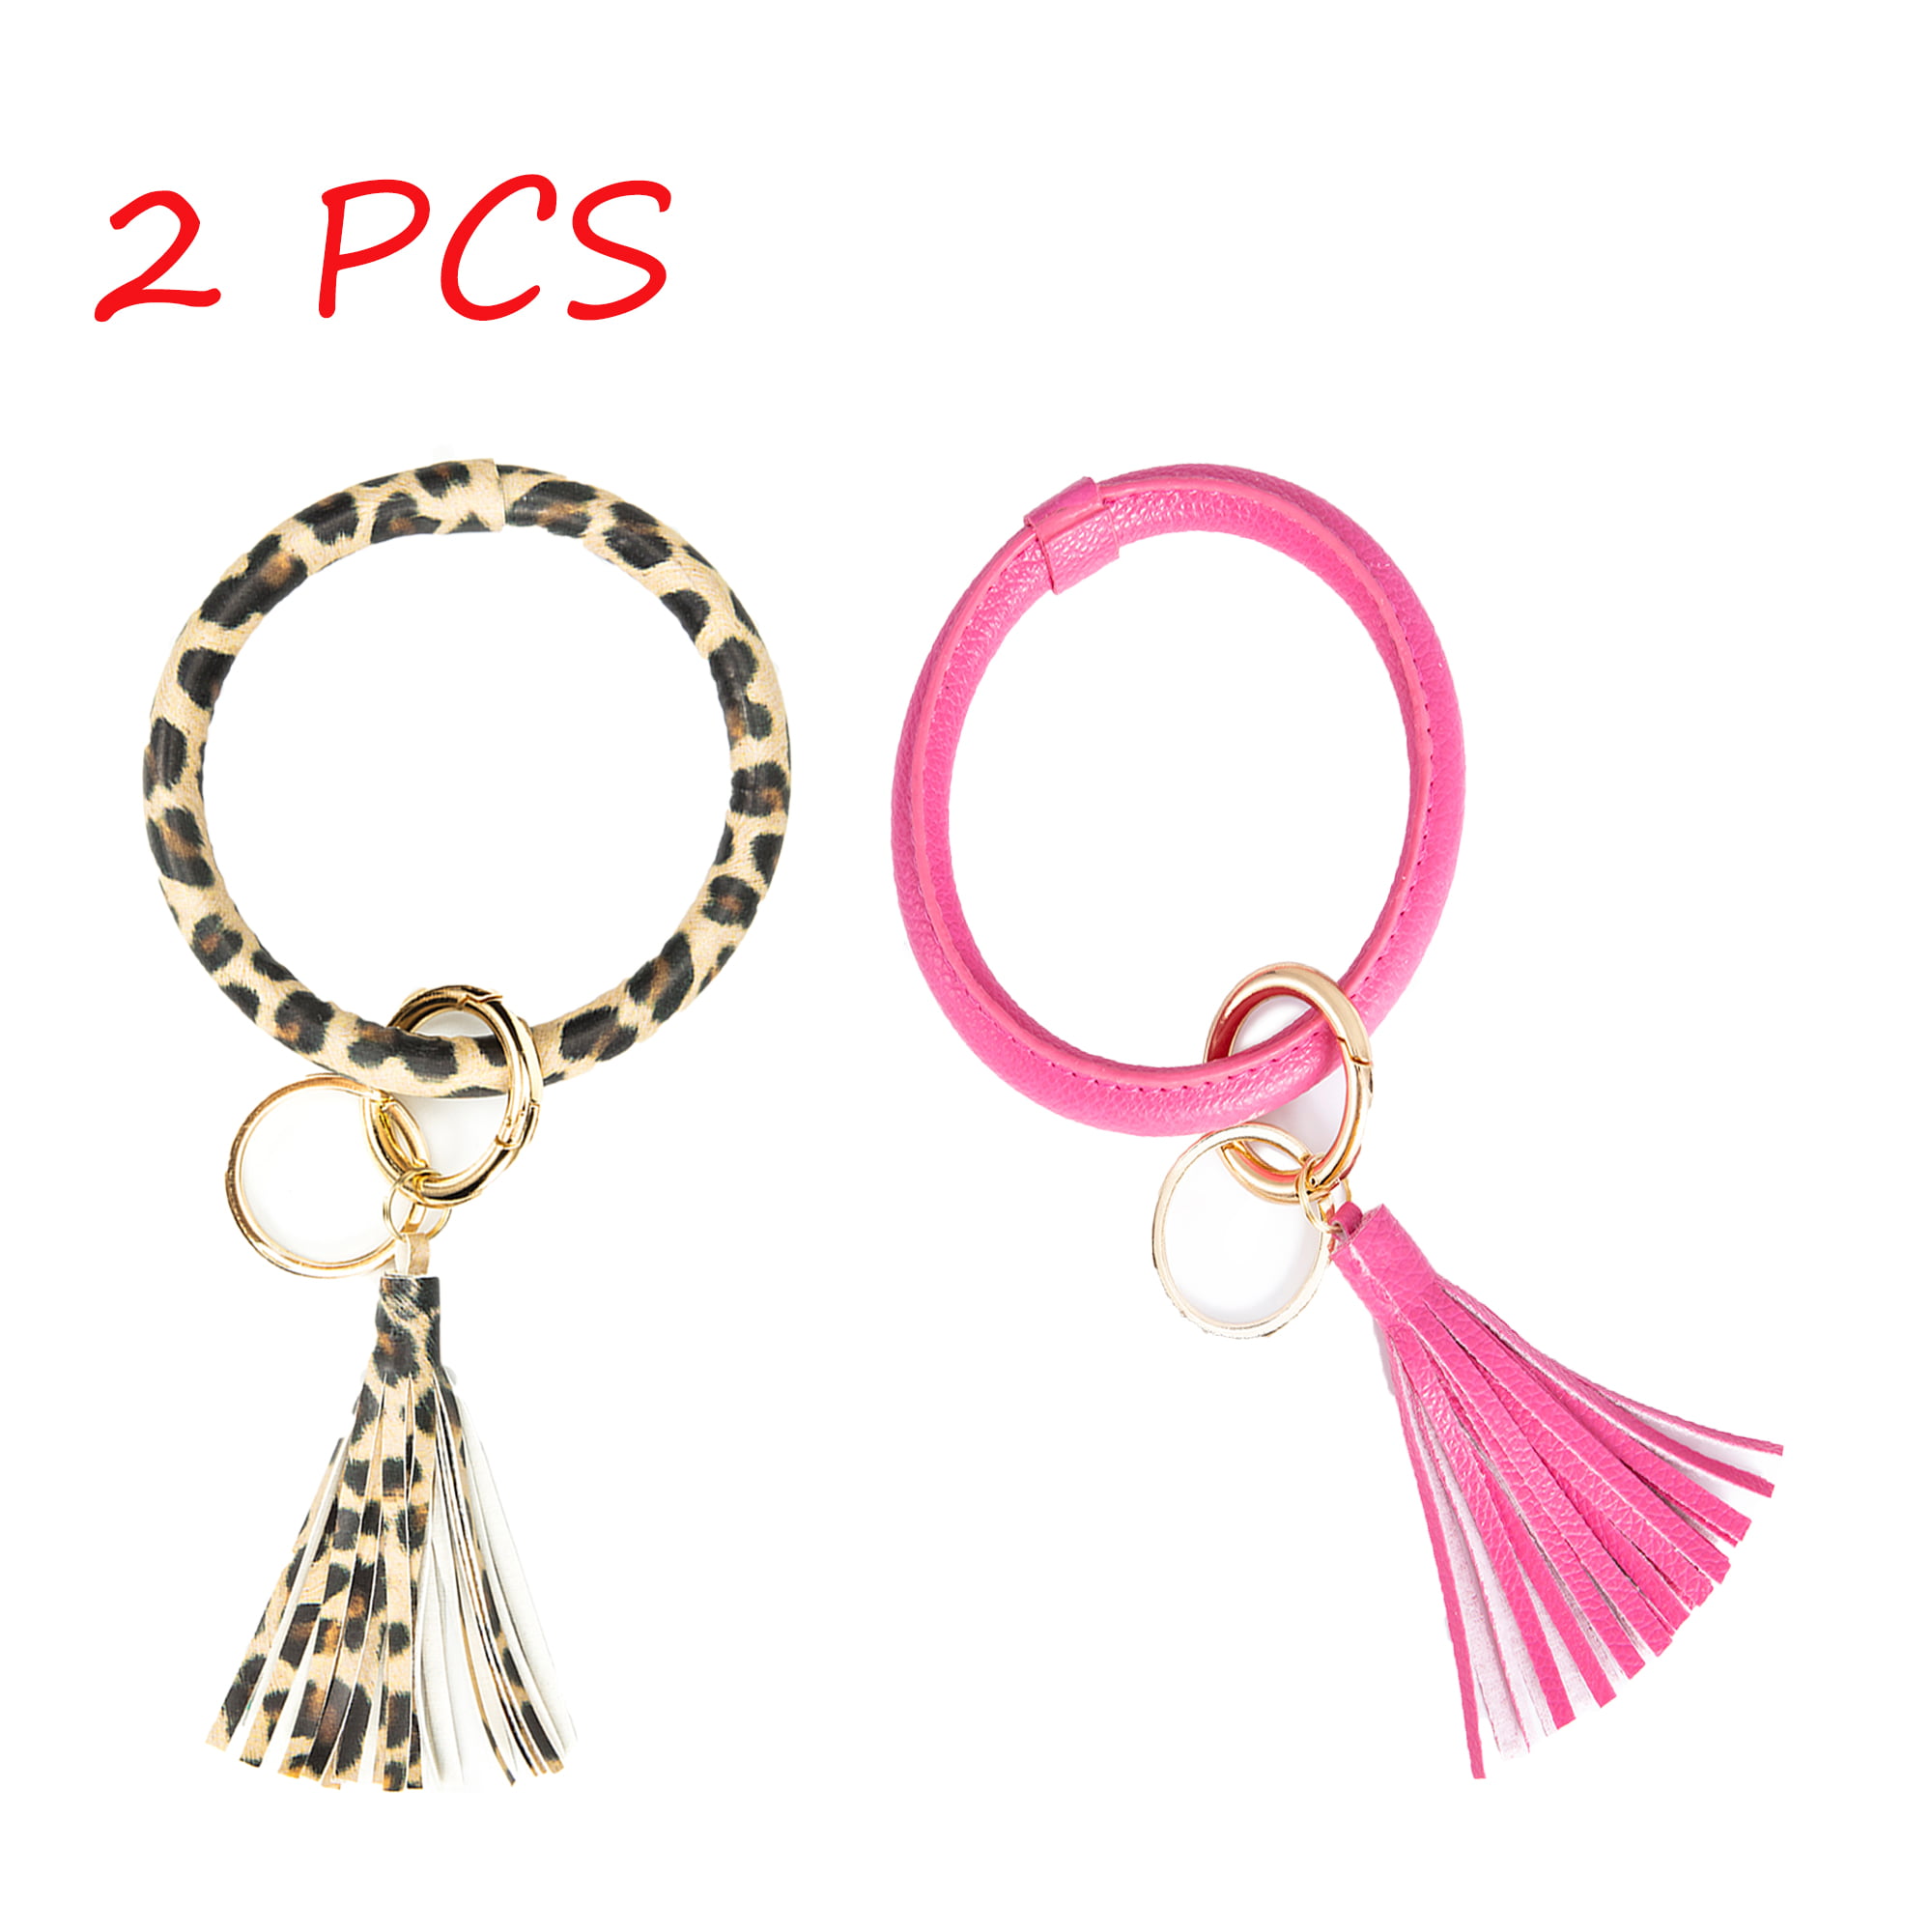 2PCS Large Circle Leather Key Ring Bracelets Wrist Key Chain Bangle Key  Rings